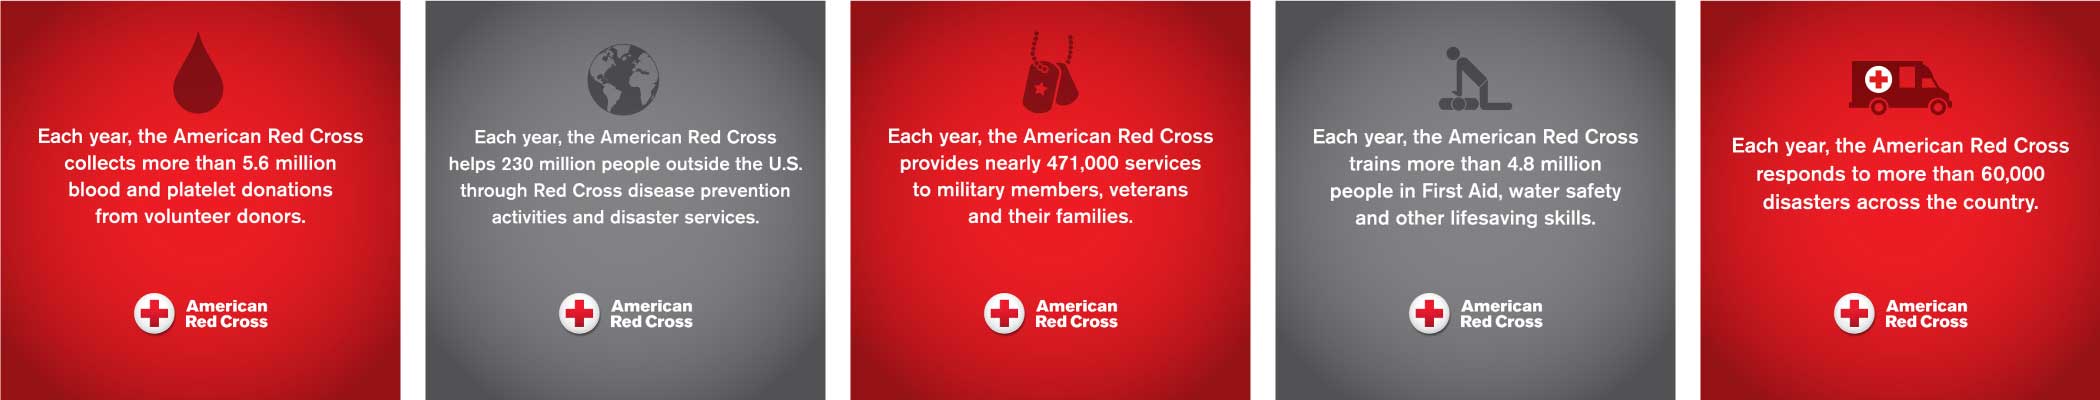 American Red Cross social media graphics